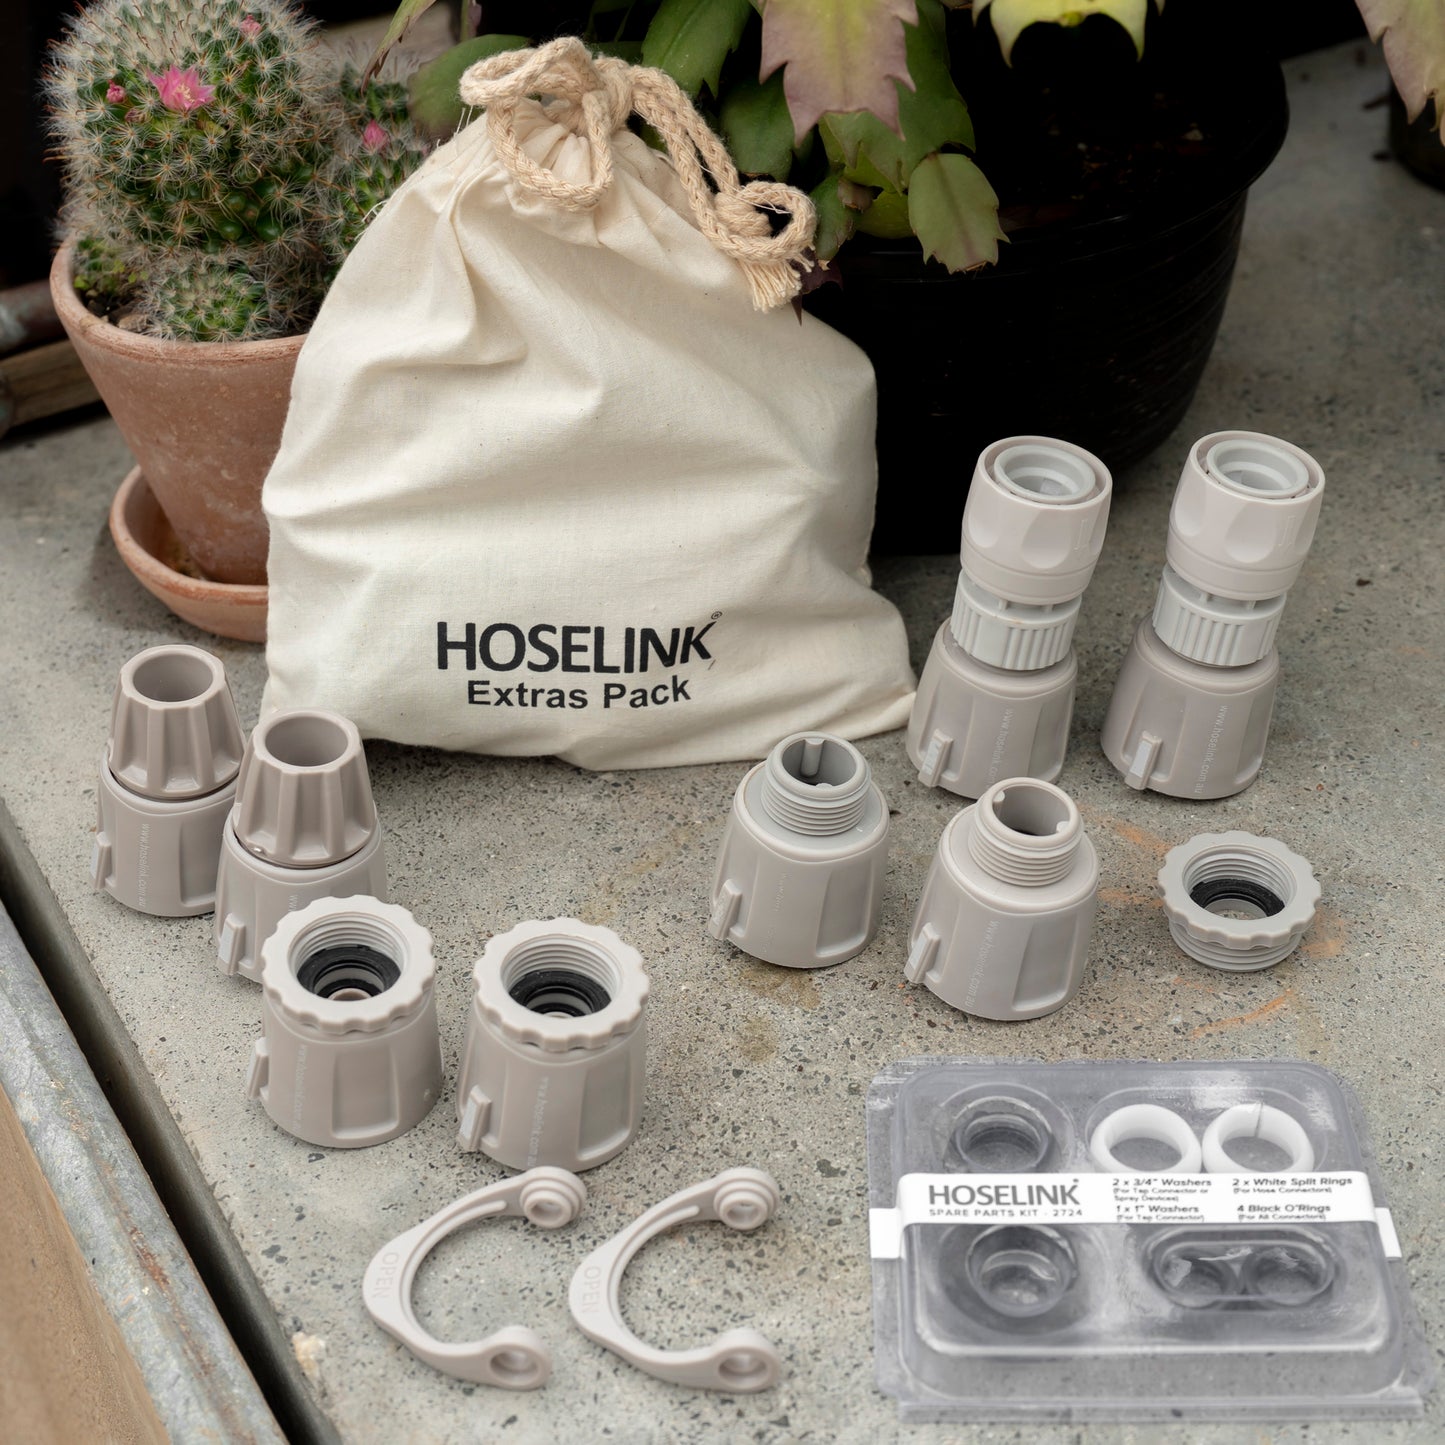 Handy Hoselink Extras Pack